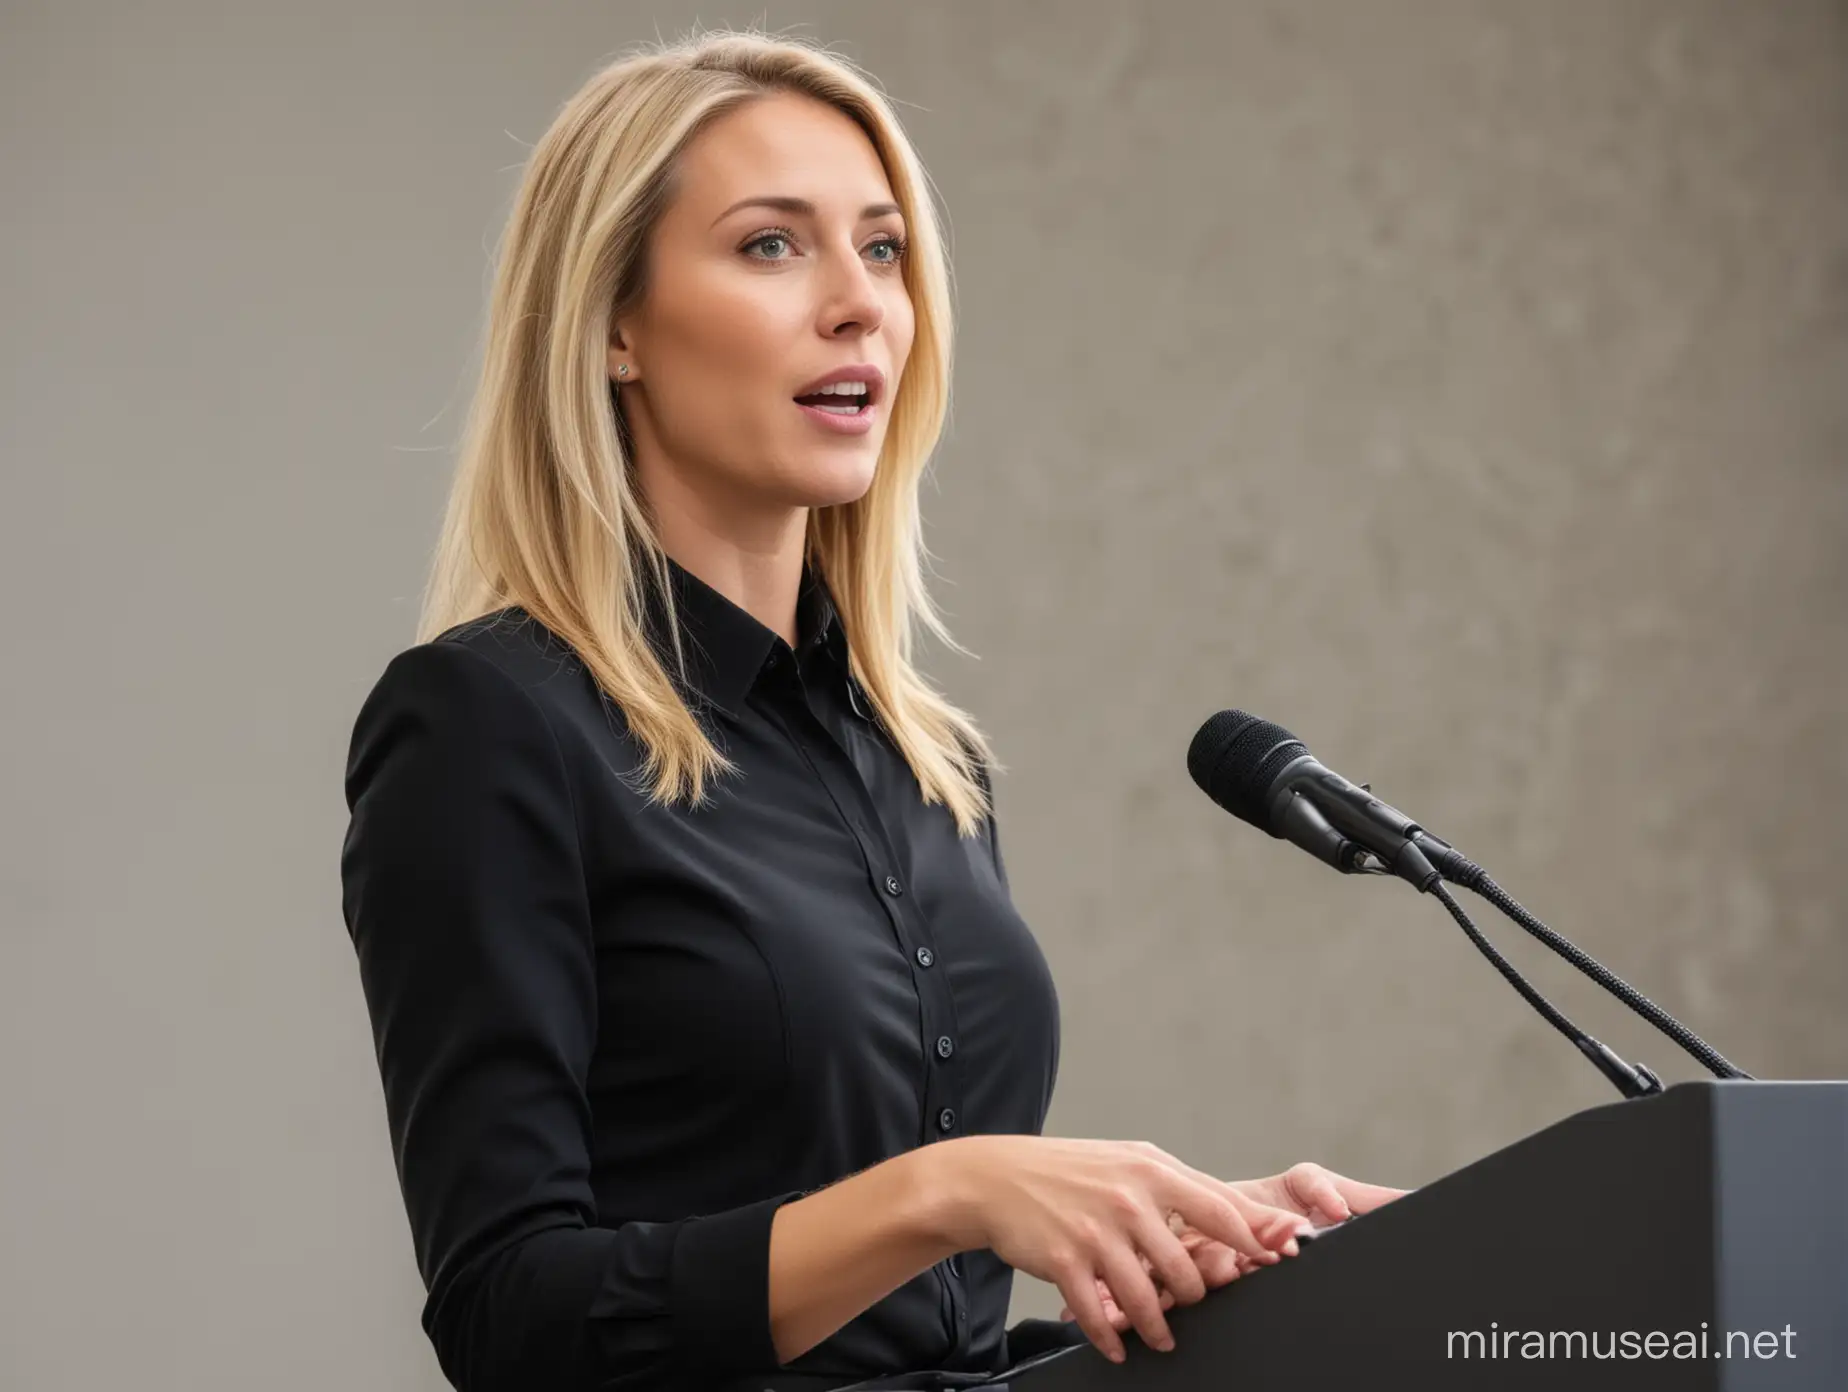 blonde woman wearing black business casual attire giving a speech